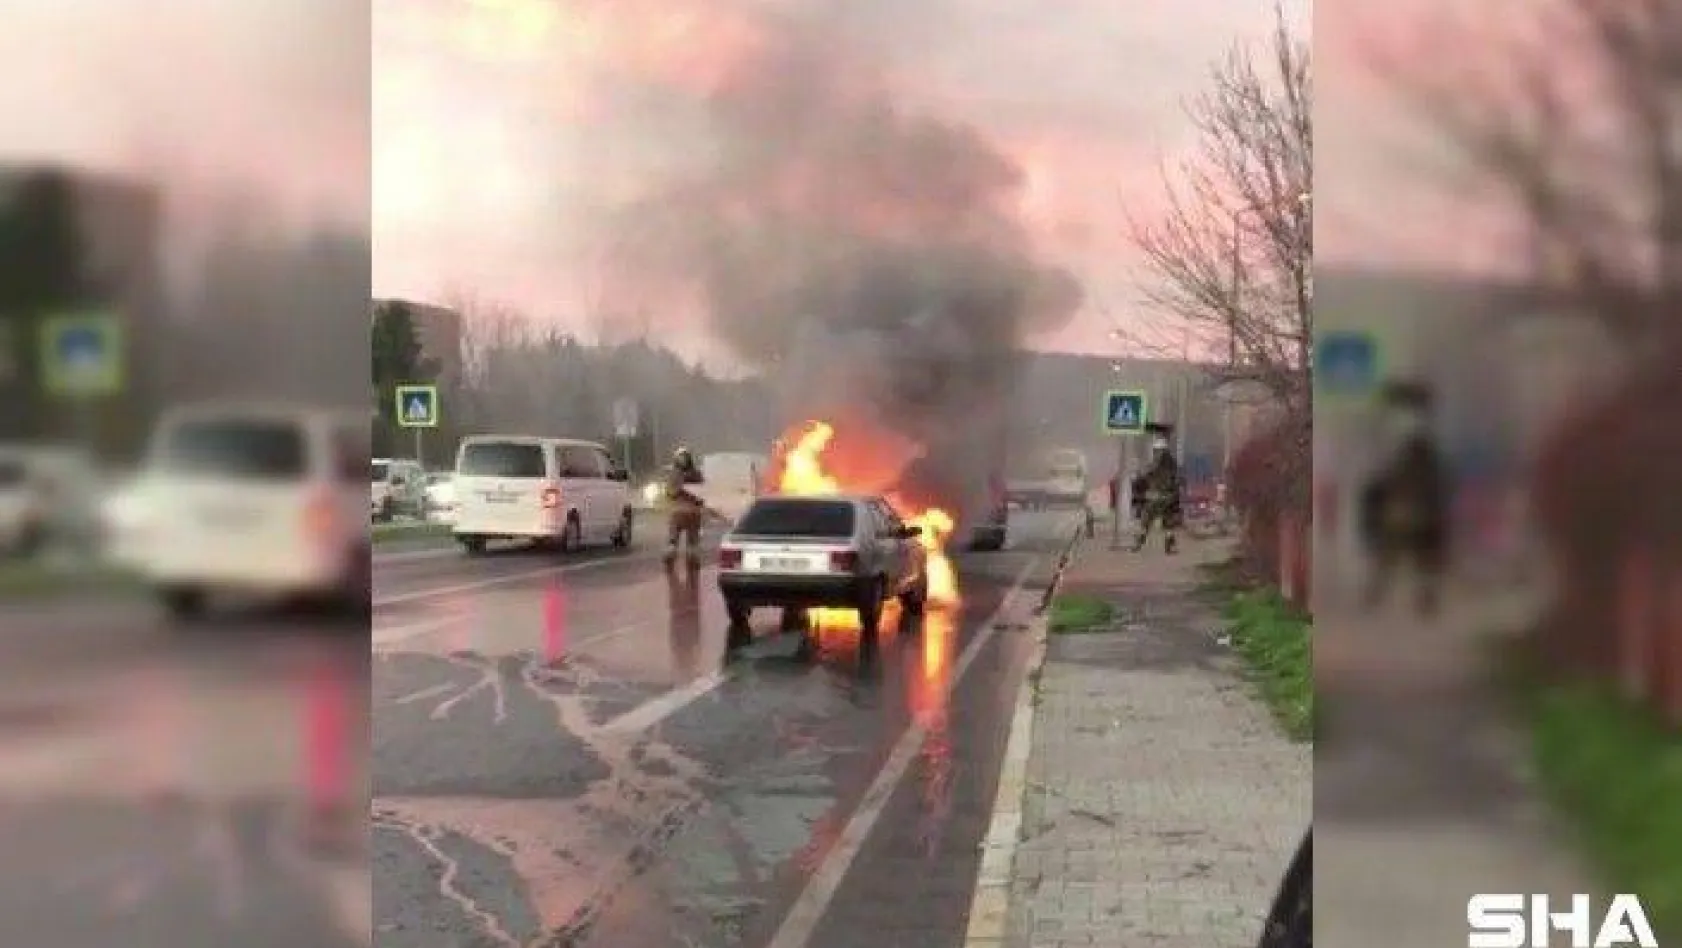 Otomobil alev alev yandı, sürücü son anda kurtuldu